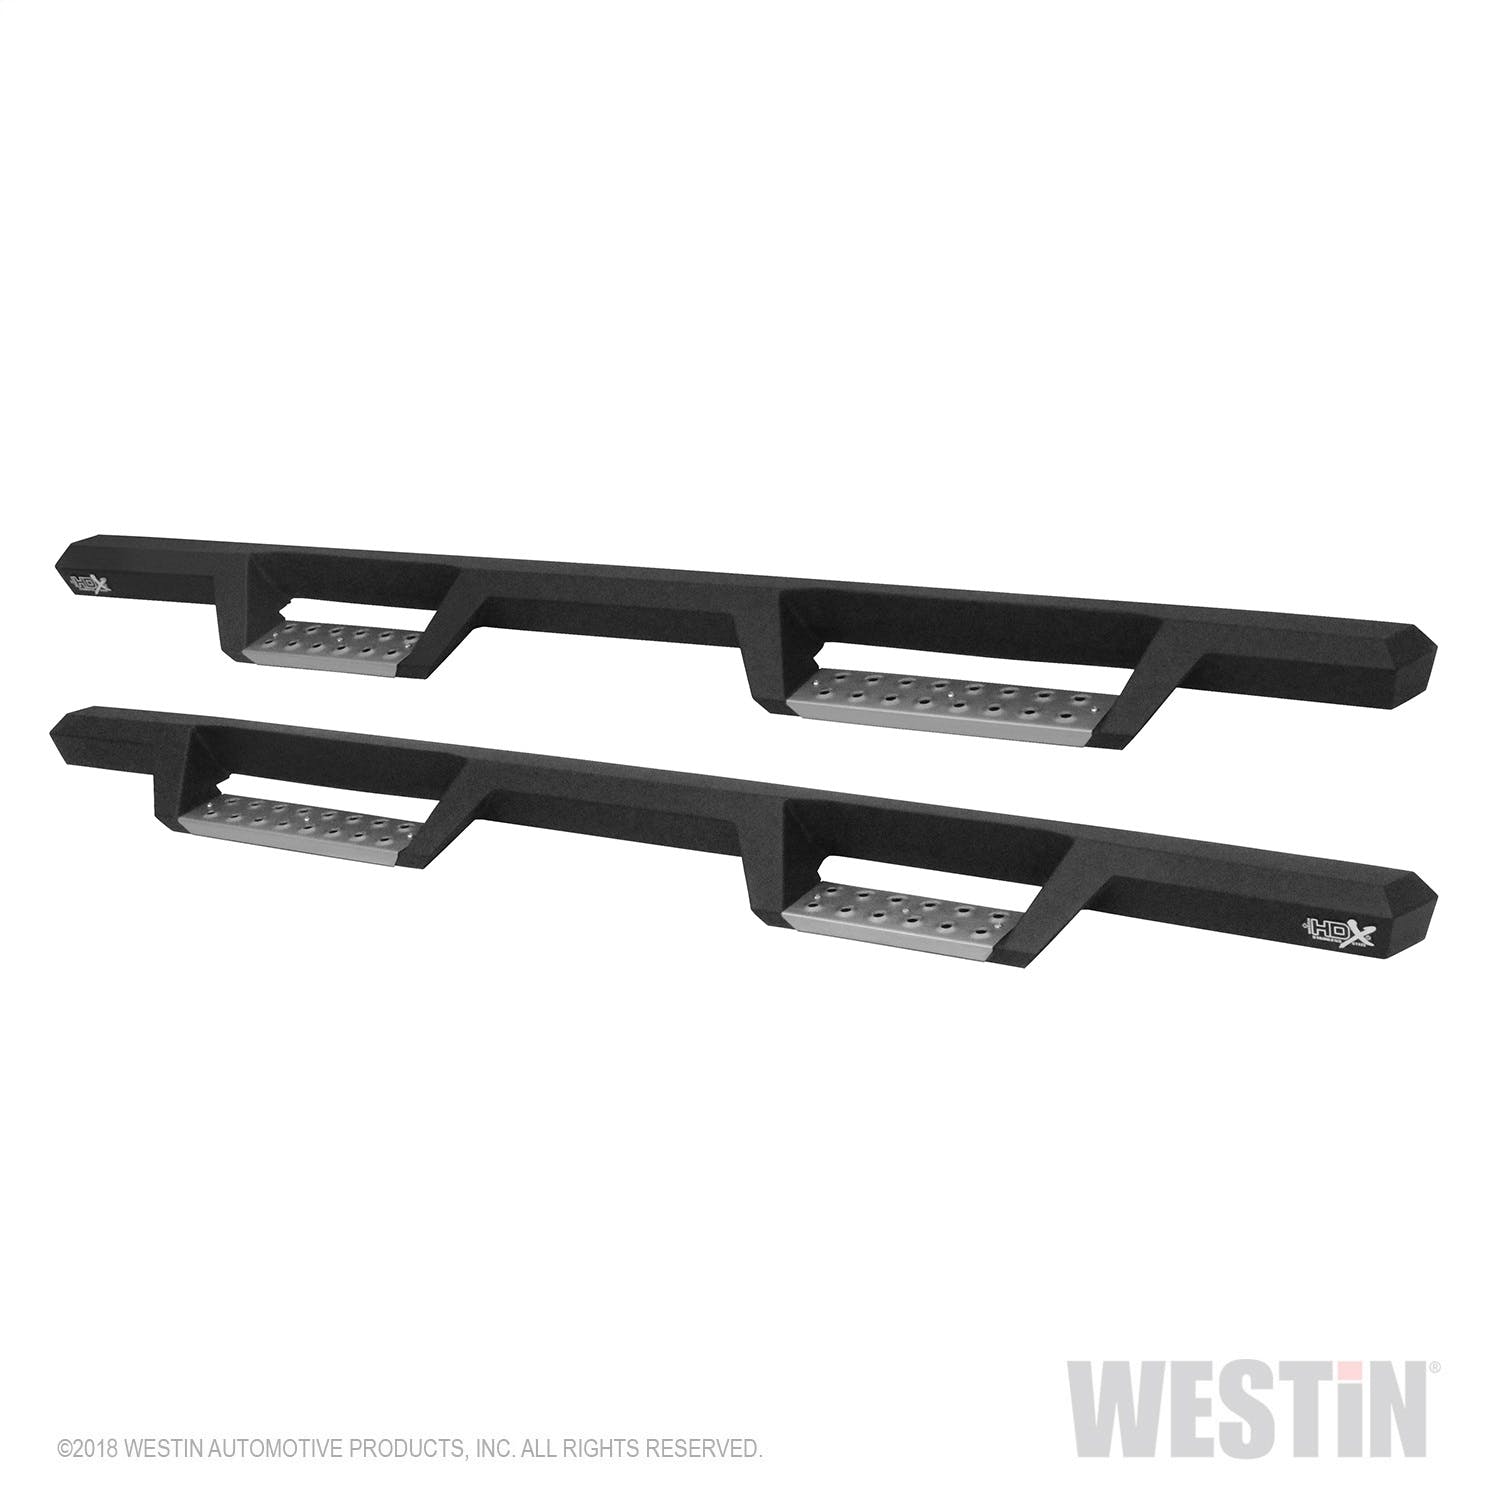 Westin Automotive 56-138352 HDX Stainless Drop Nerf Step Bars Textured Black